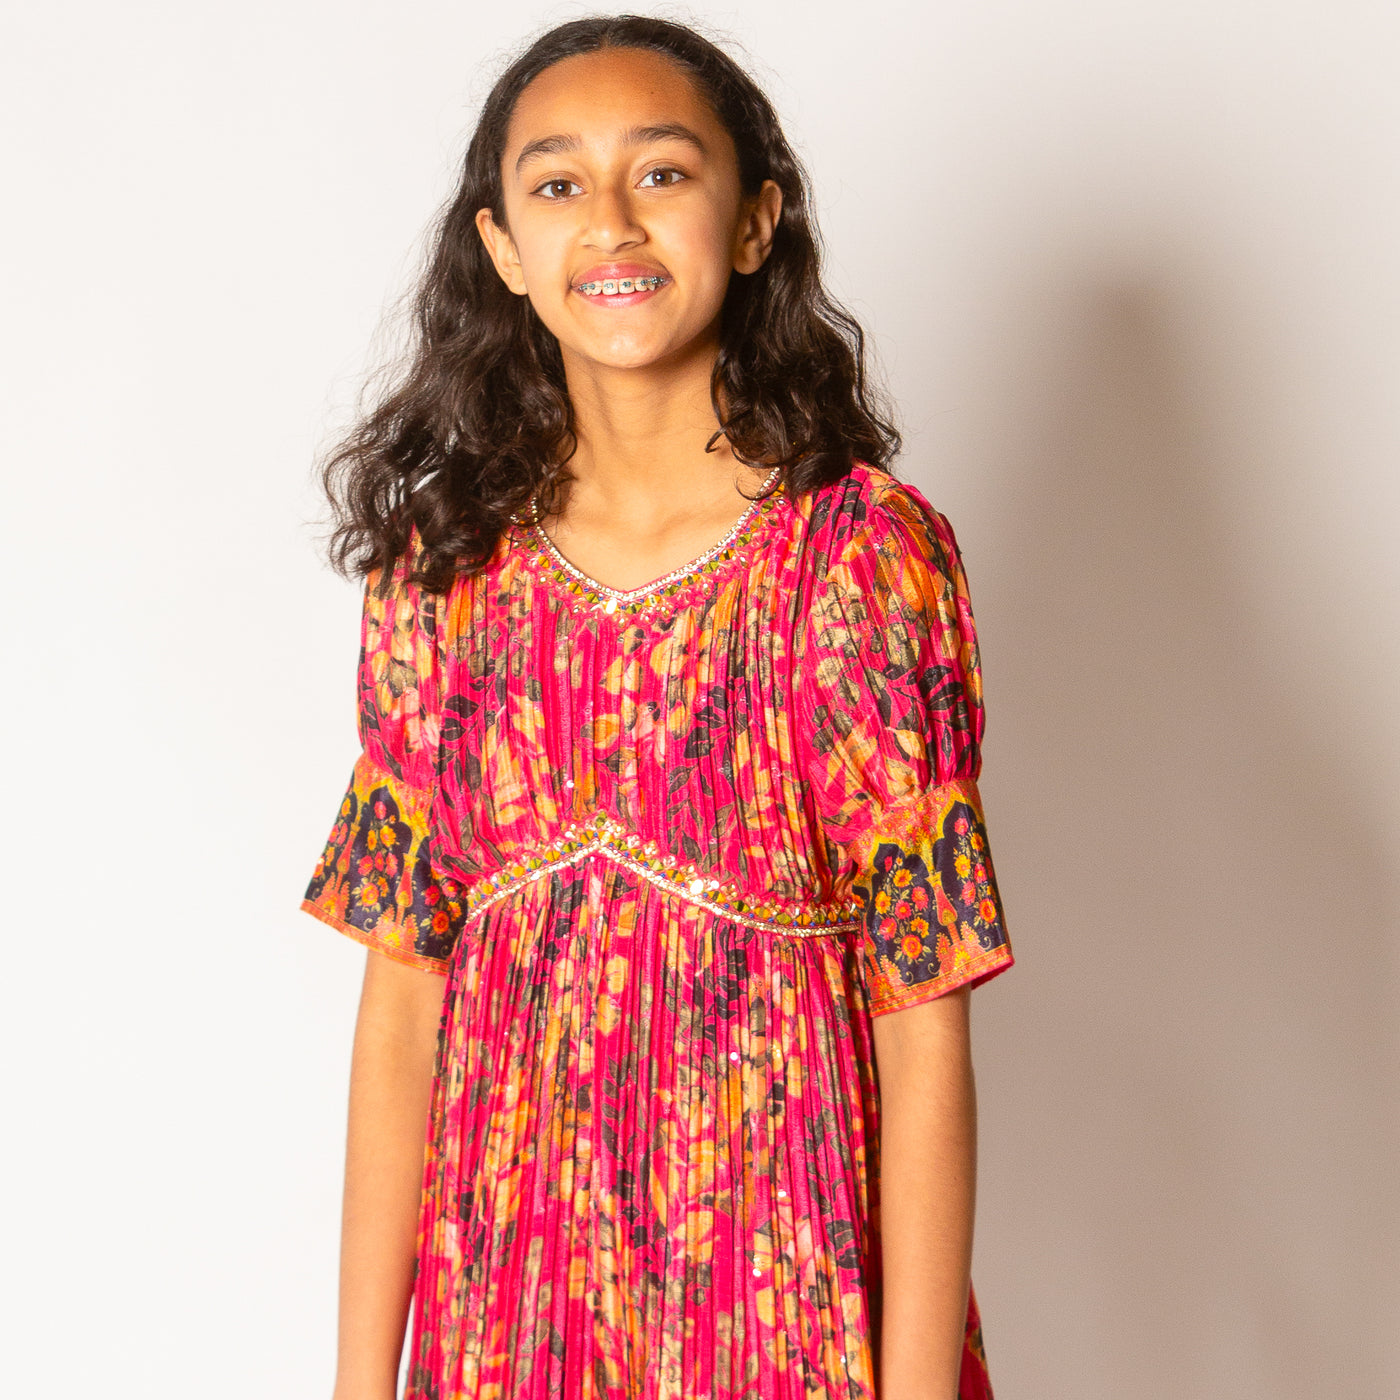 Sania - Rani Art Silk Printed Girls Gown